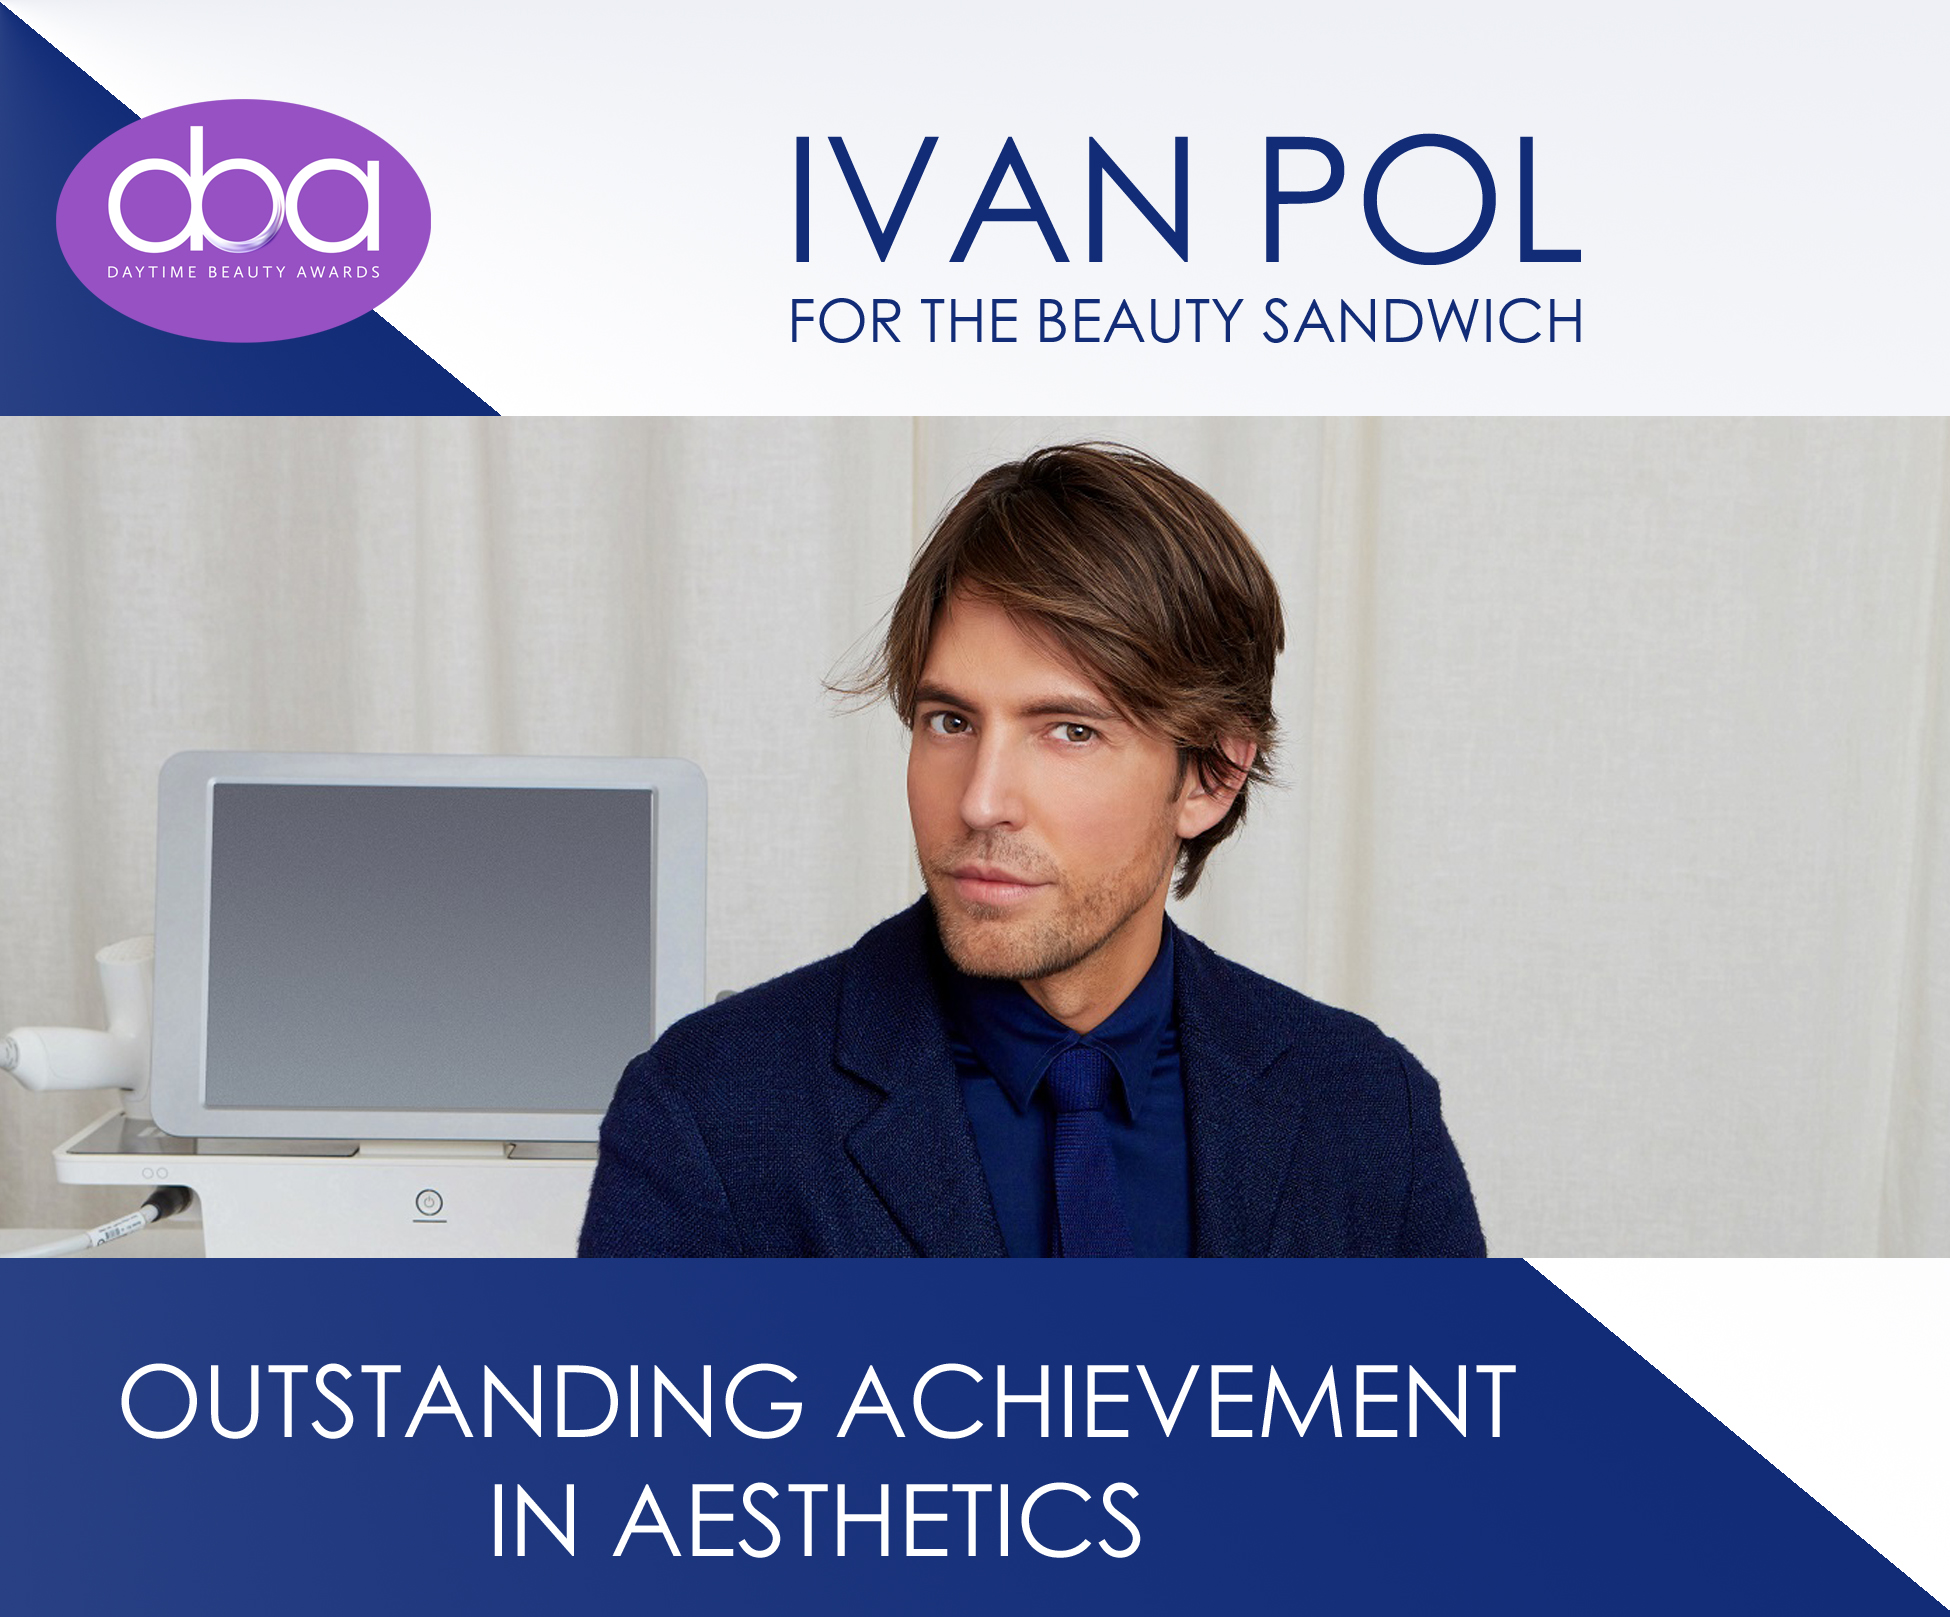 Ivan Pol, Daytime Beauty Awards, beauty sandwich facial